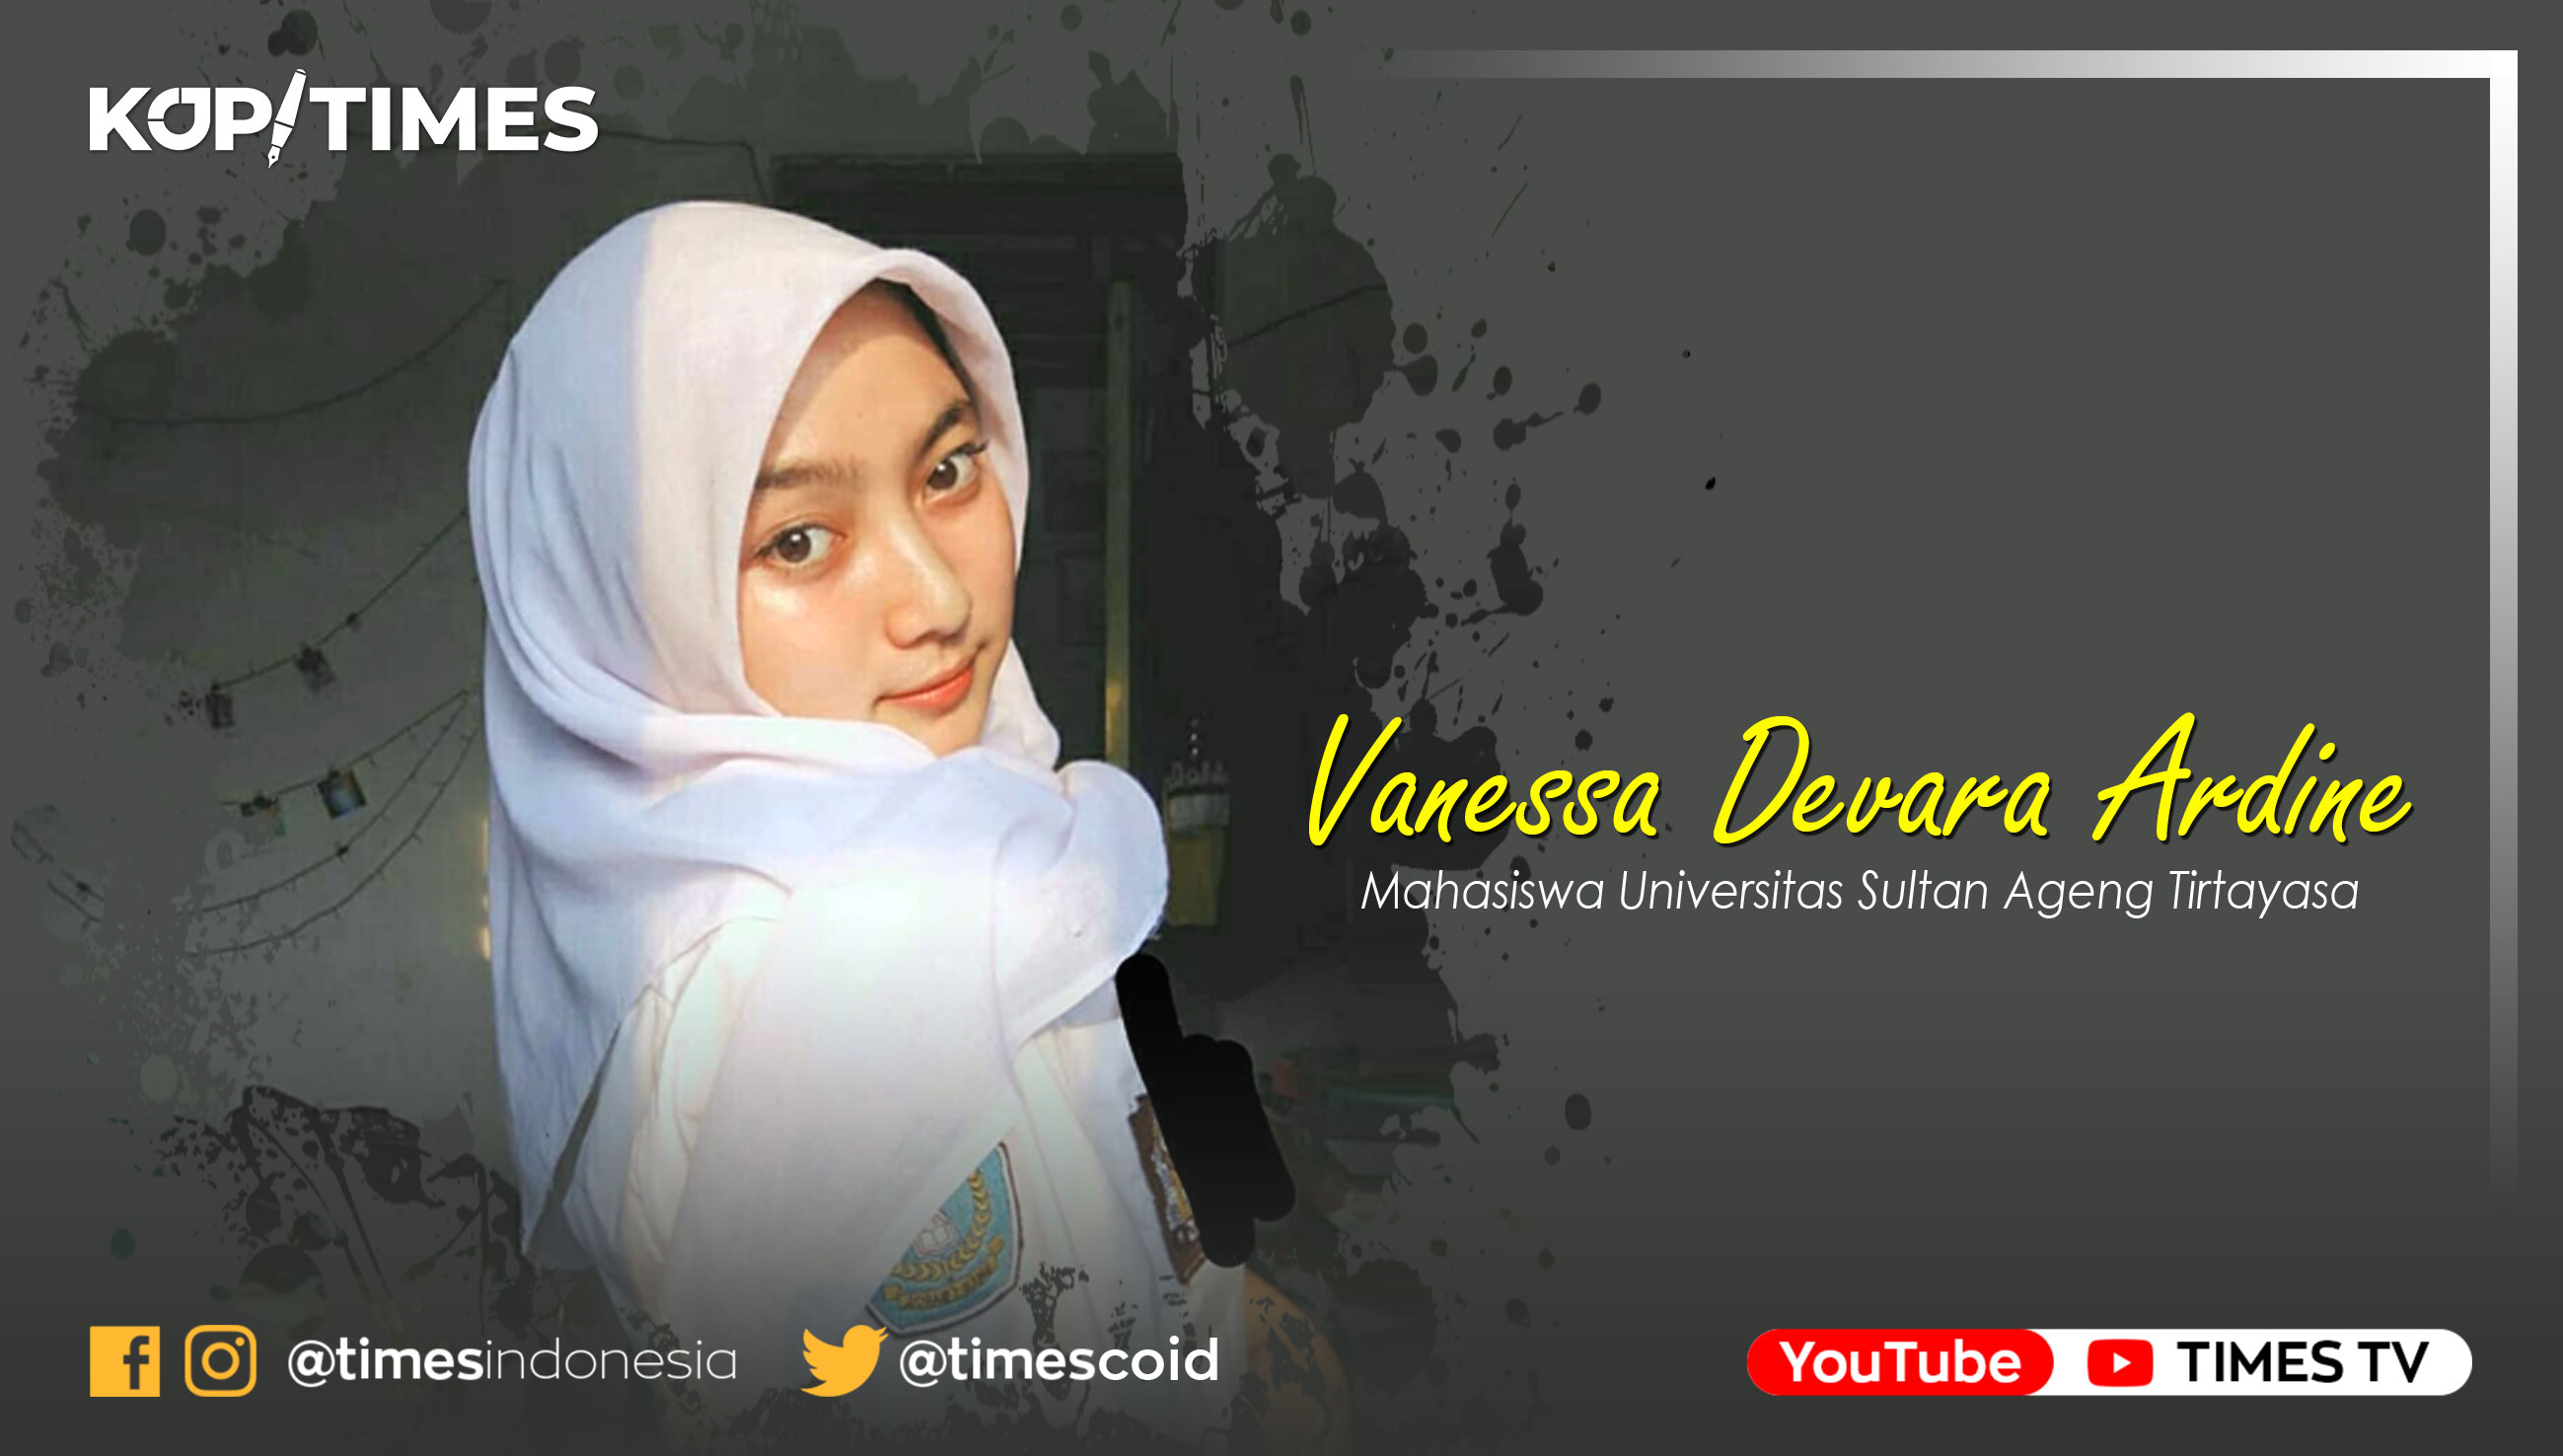 Vanessa Devara Ardine, Mahasiswa Program Studi Ilmu Komunikasi FISIP, Universitas Sultan Ageng Tirtayasa.